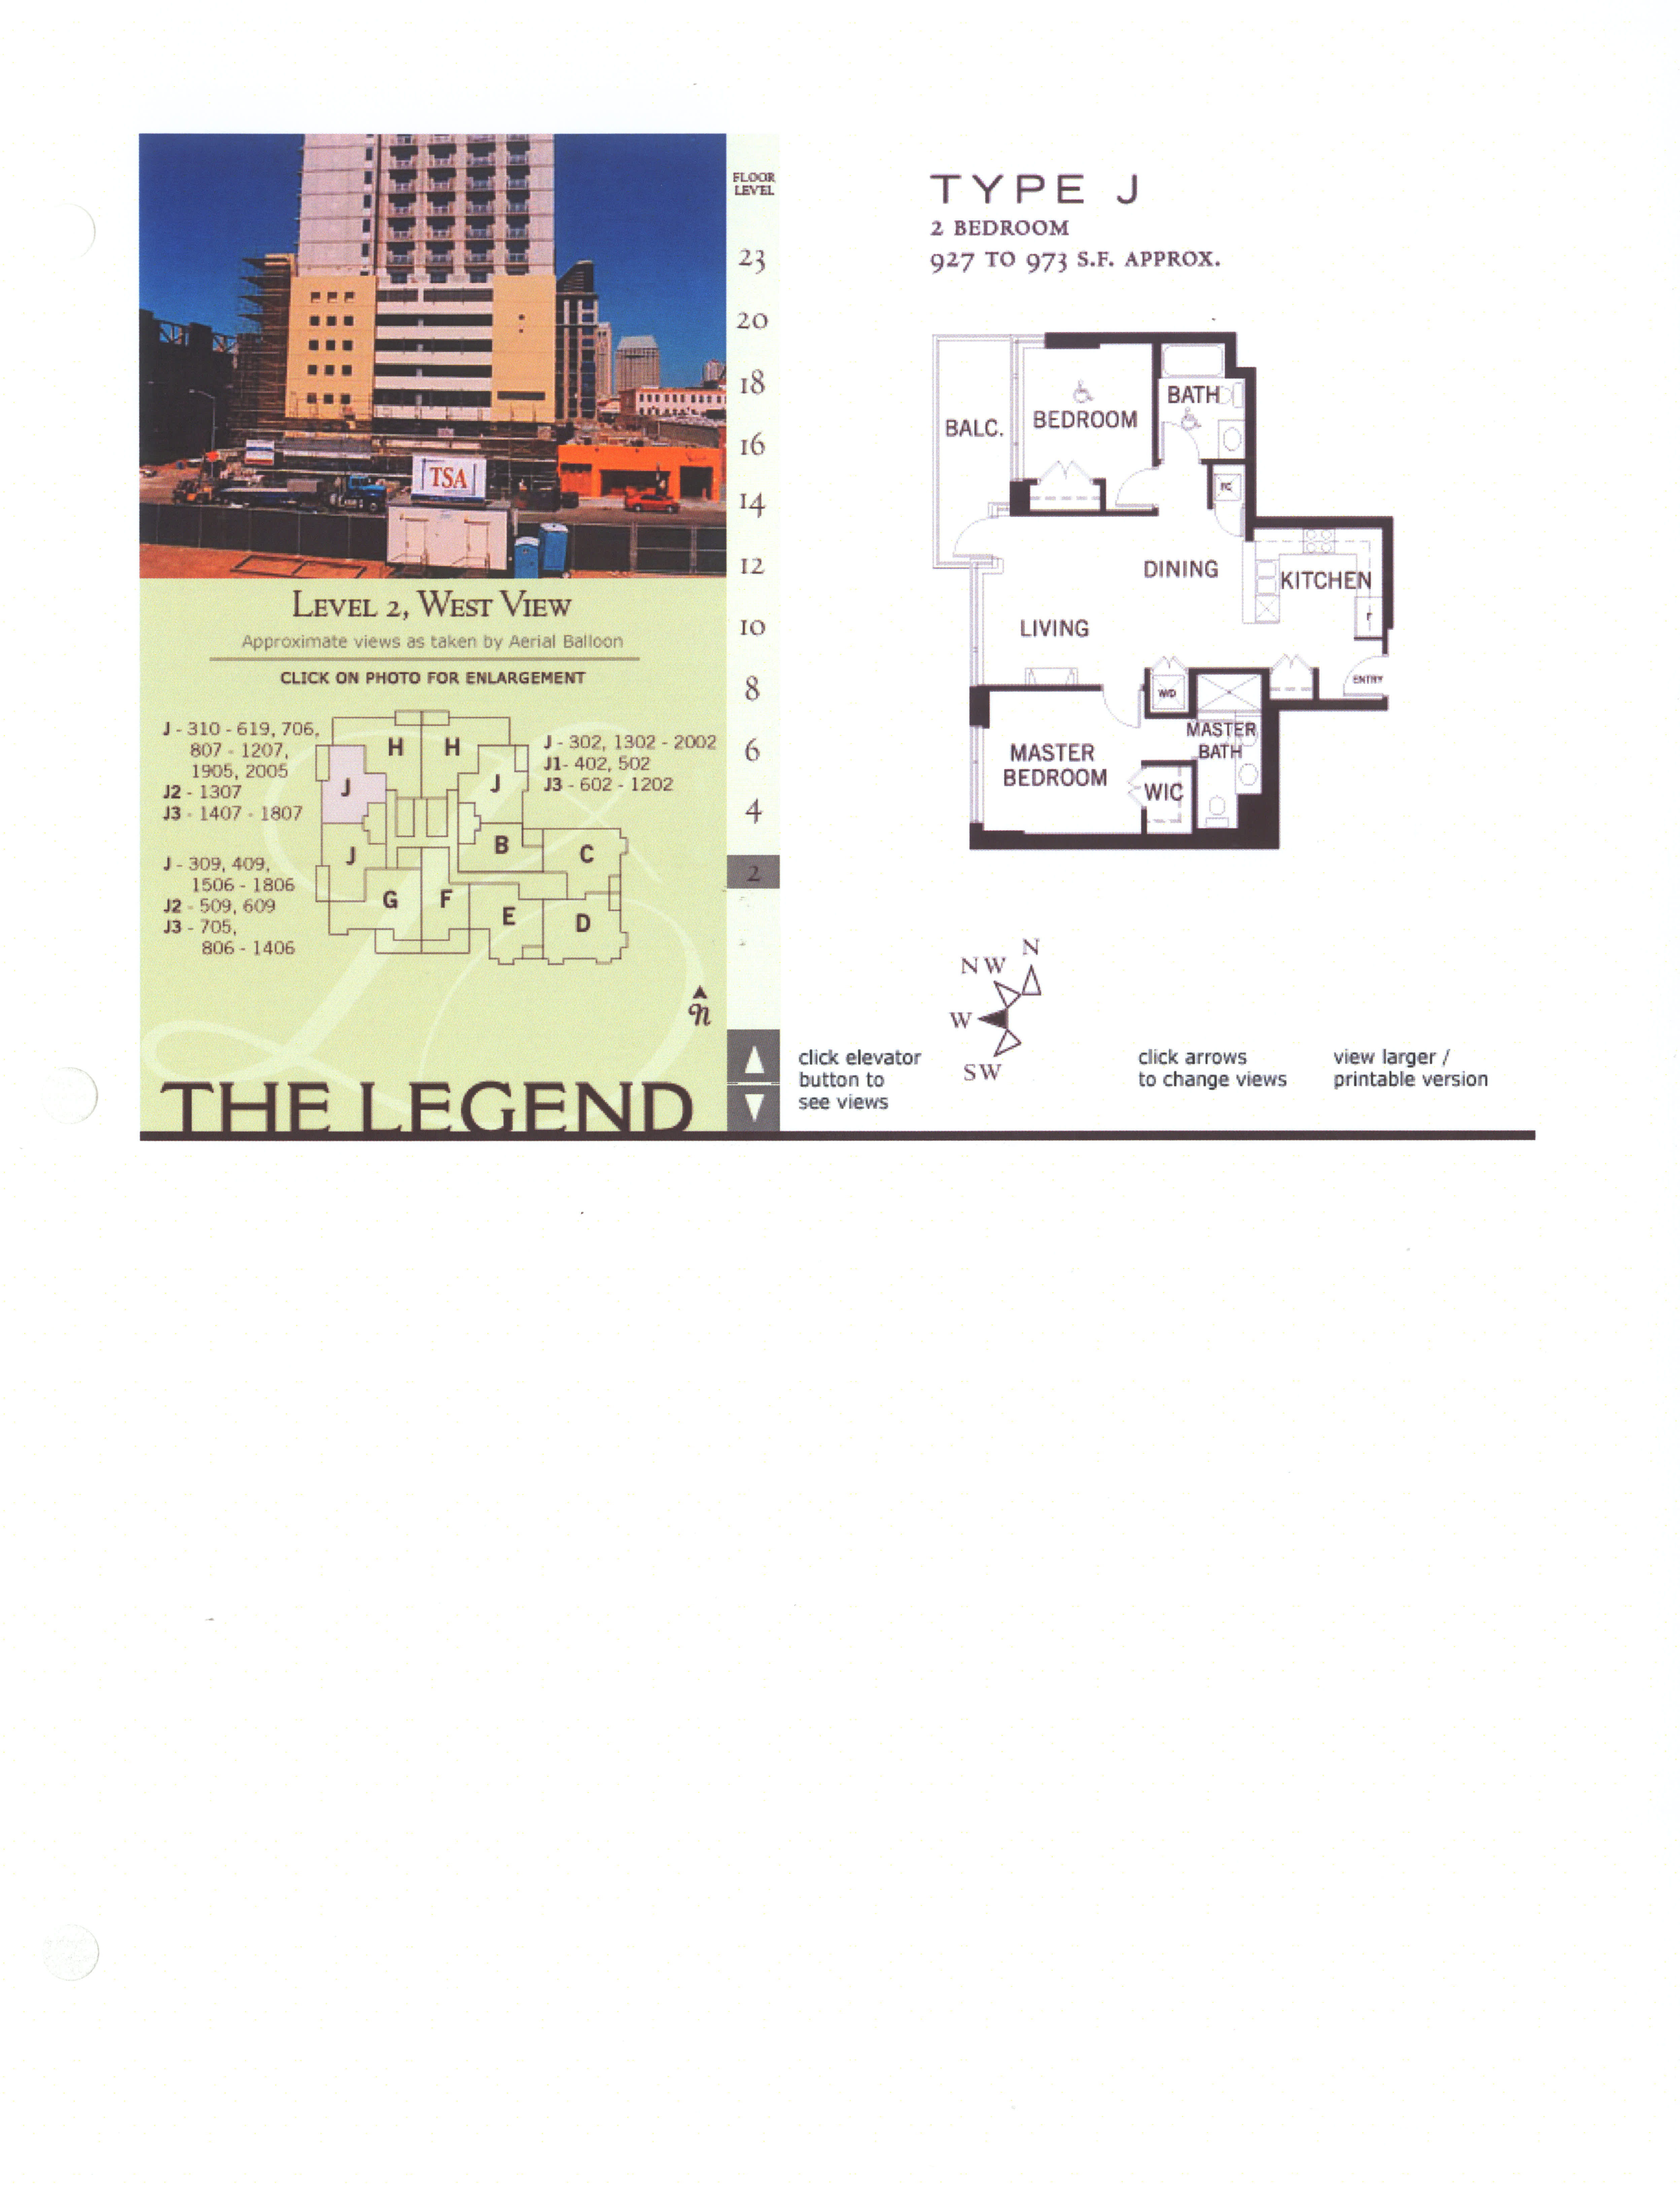 The Legend Floor Plan Level 2, West View – Type J